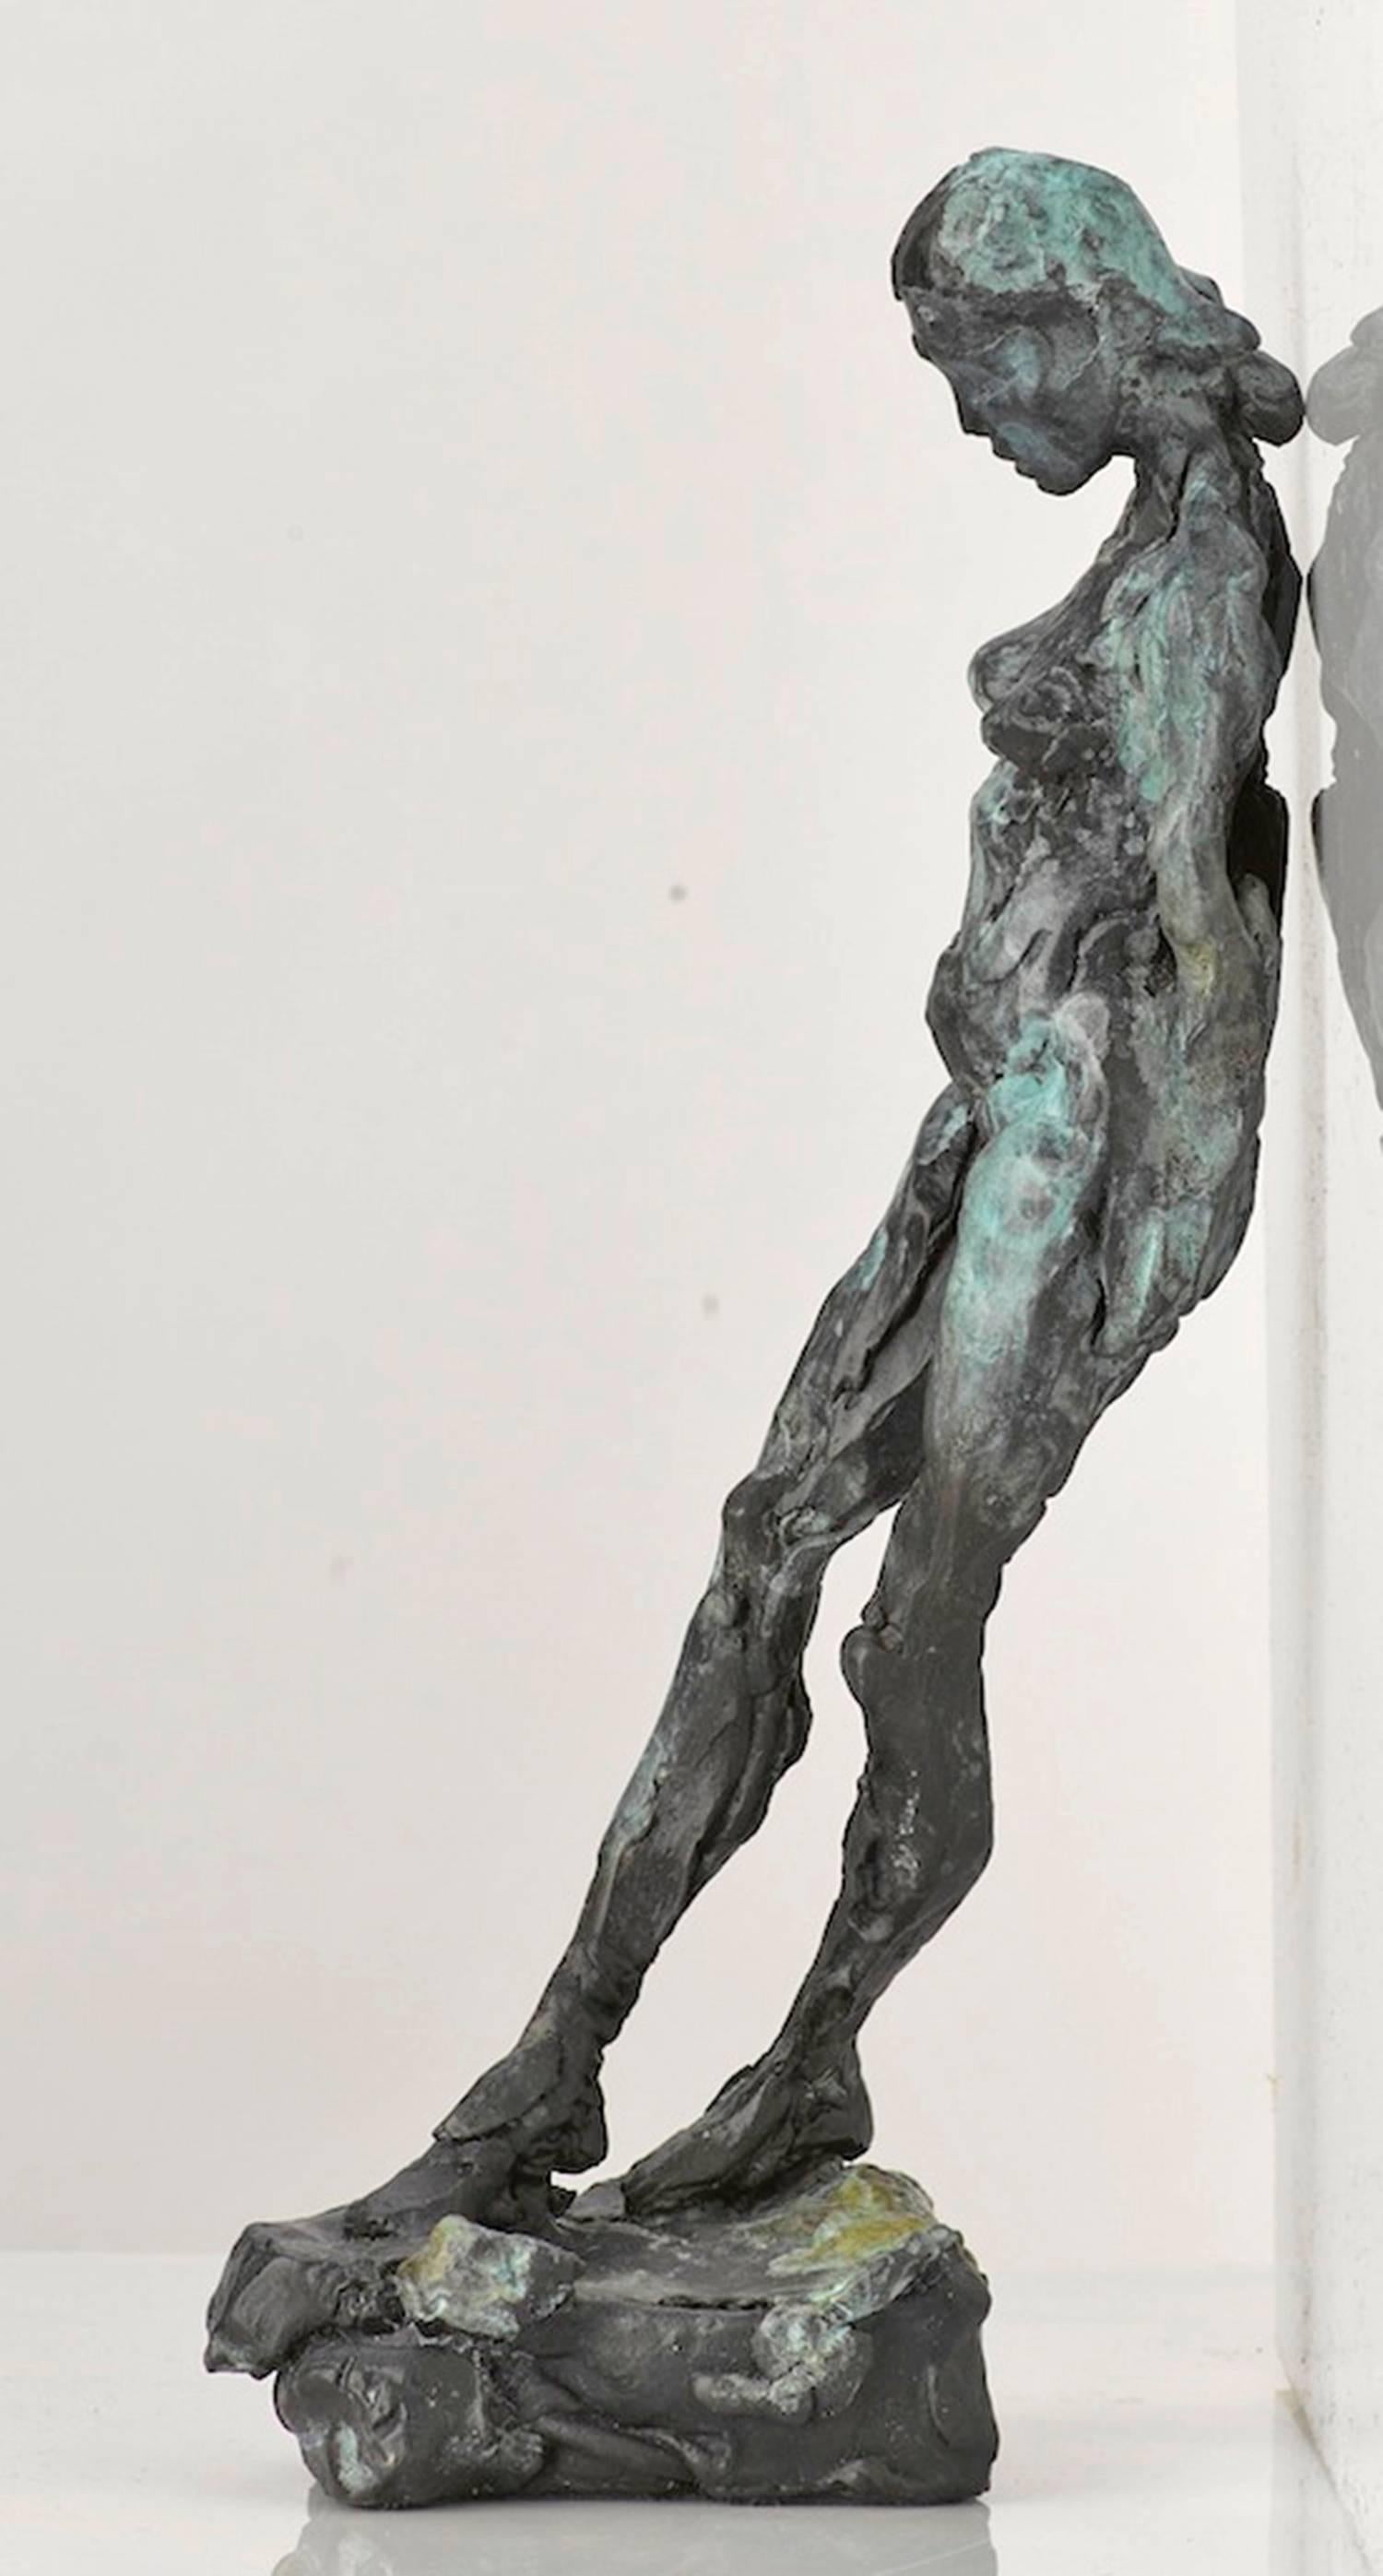 Sculpture XXXII 4/8 - nu, femme allongée, figure en bronze, statuette patinée - Or Figurative Sculpture par Richard Tosczak